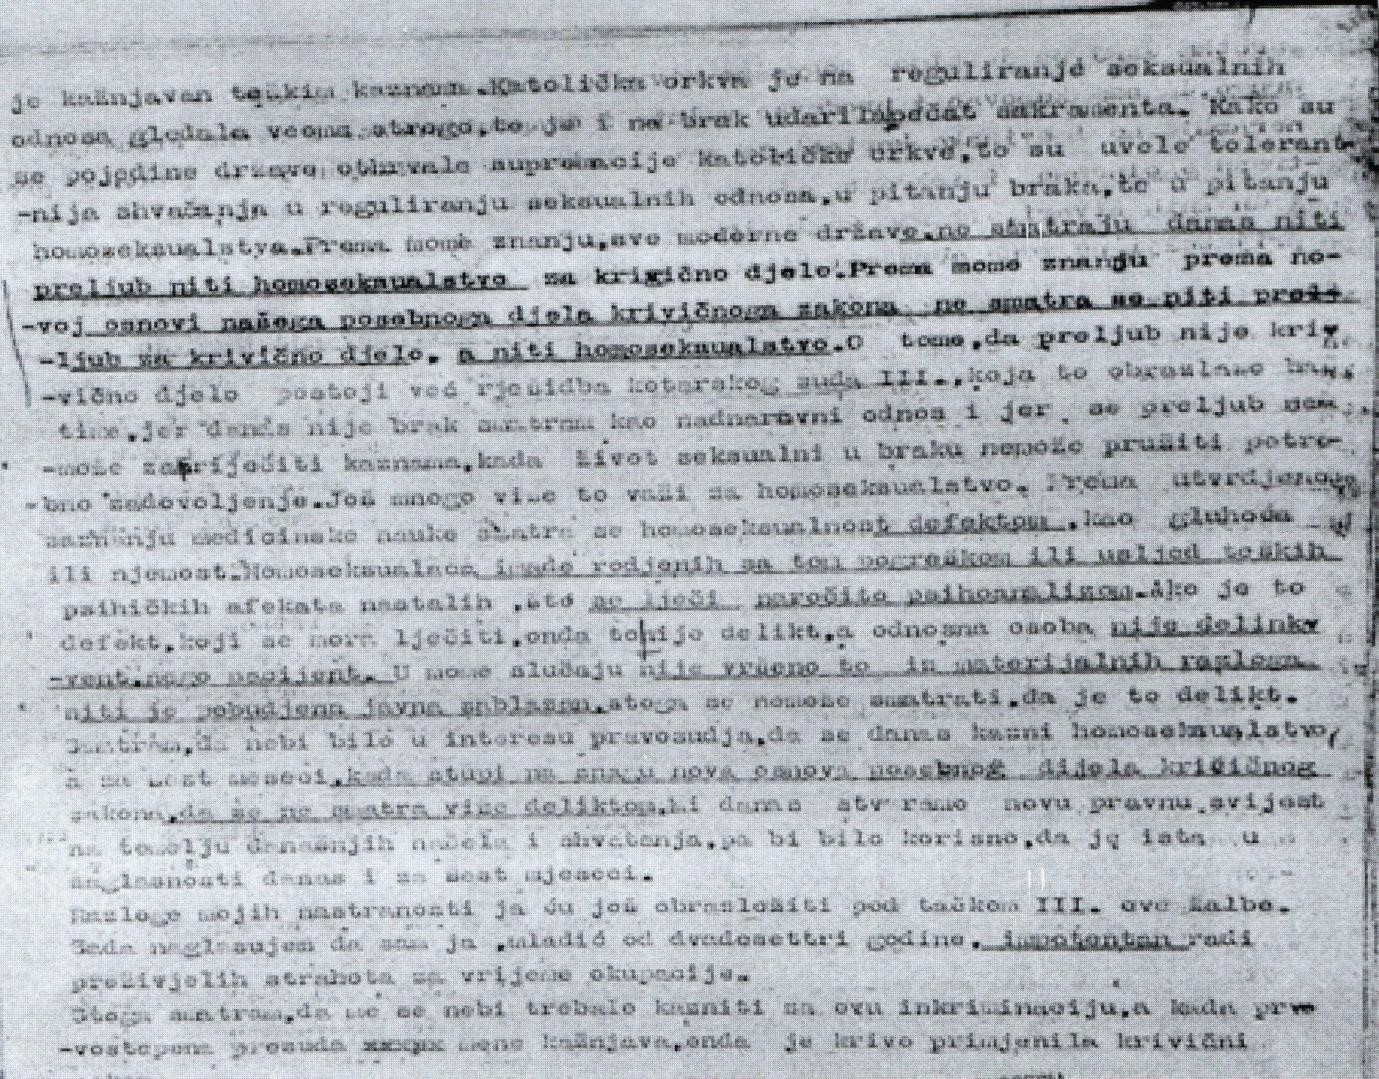 Appeal letter from Branko Vujaklija to the Zagreb District Court, December 1949.